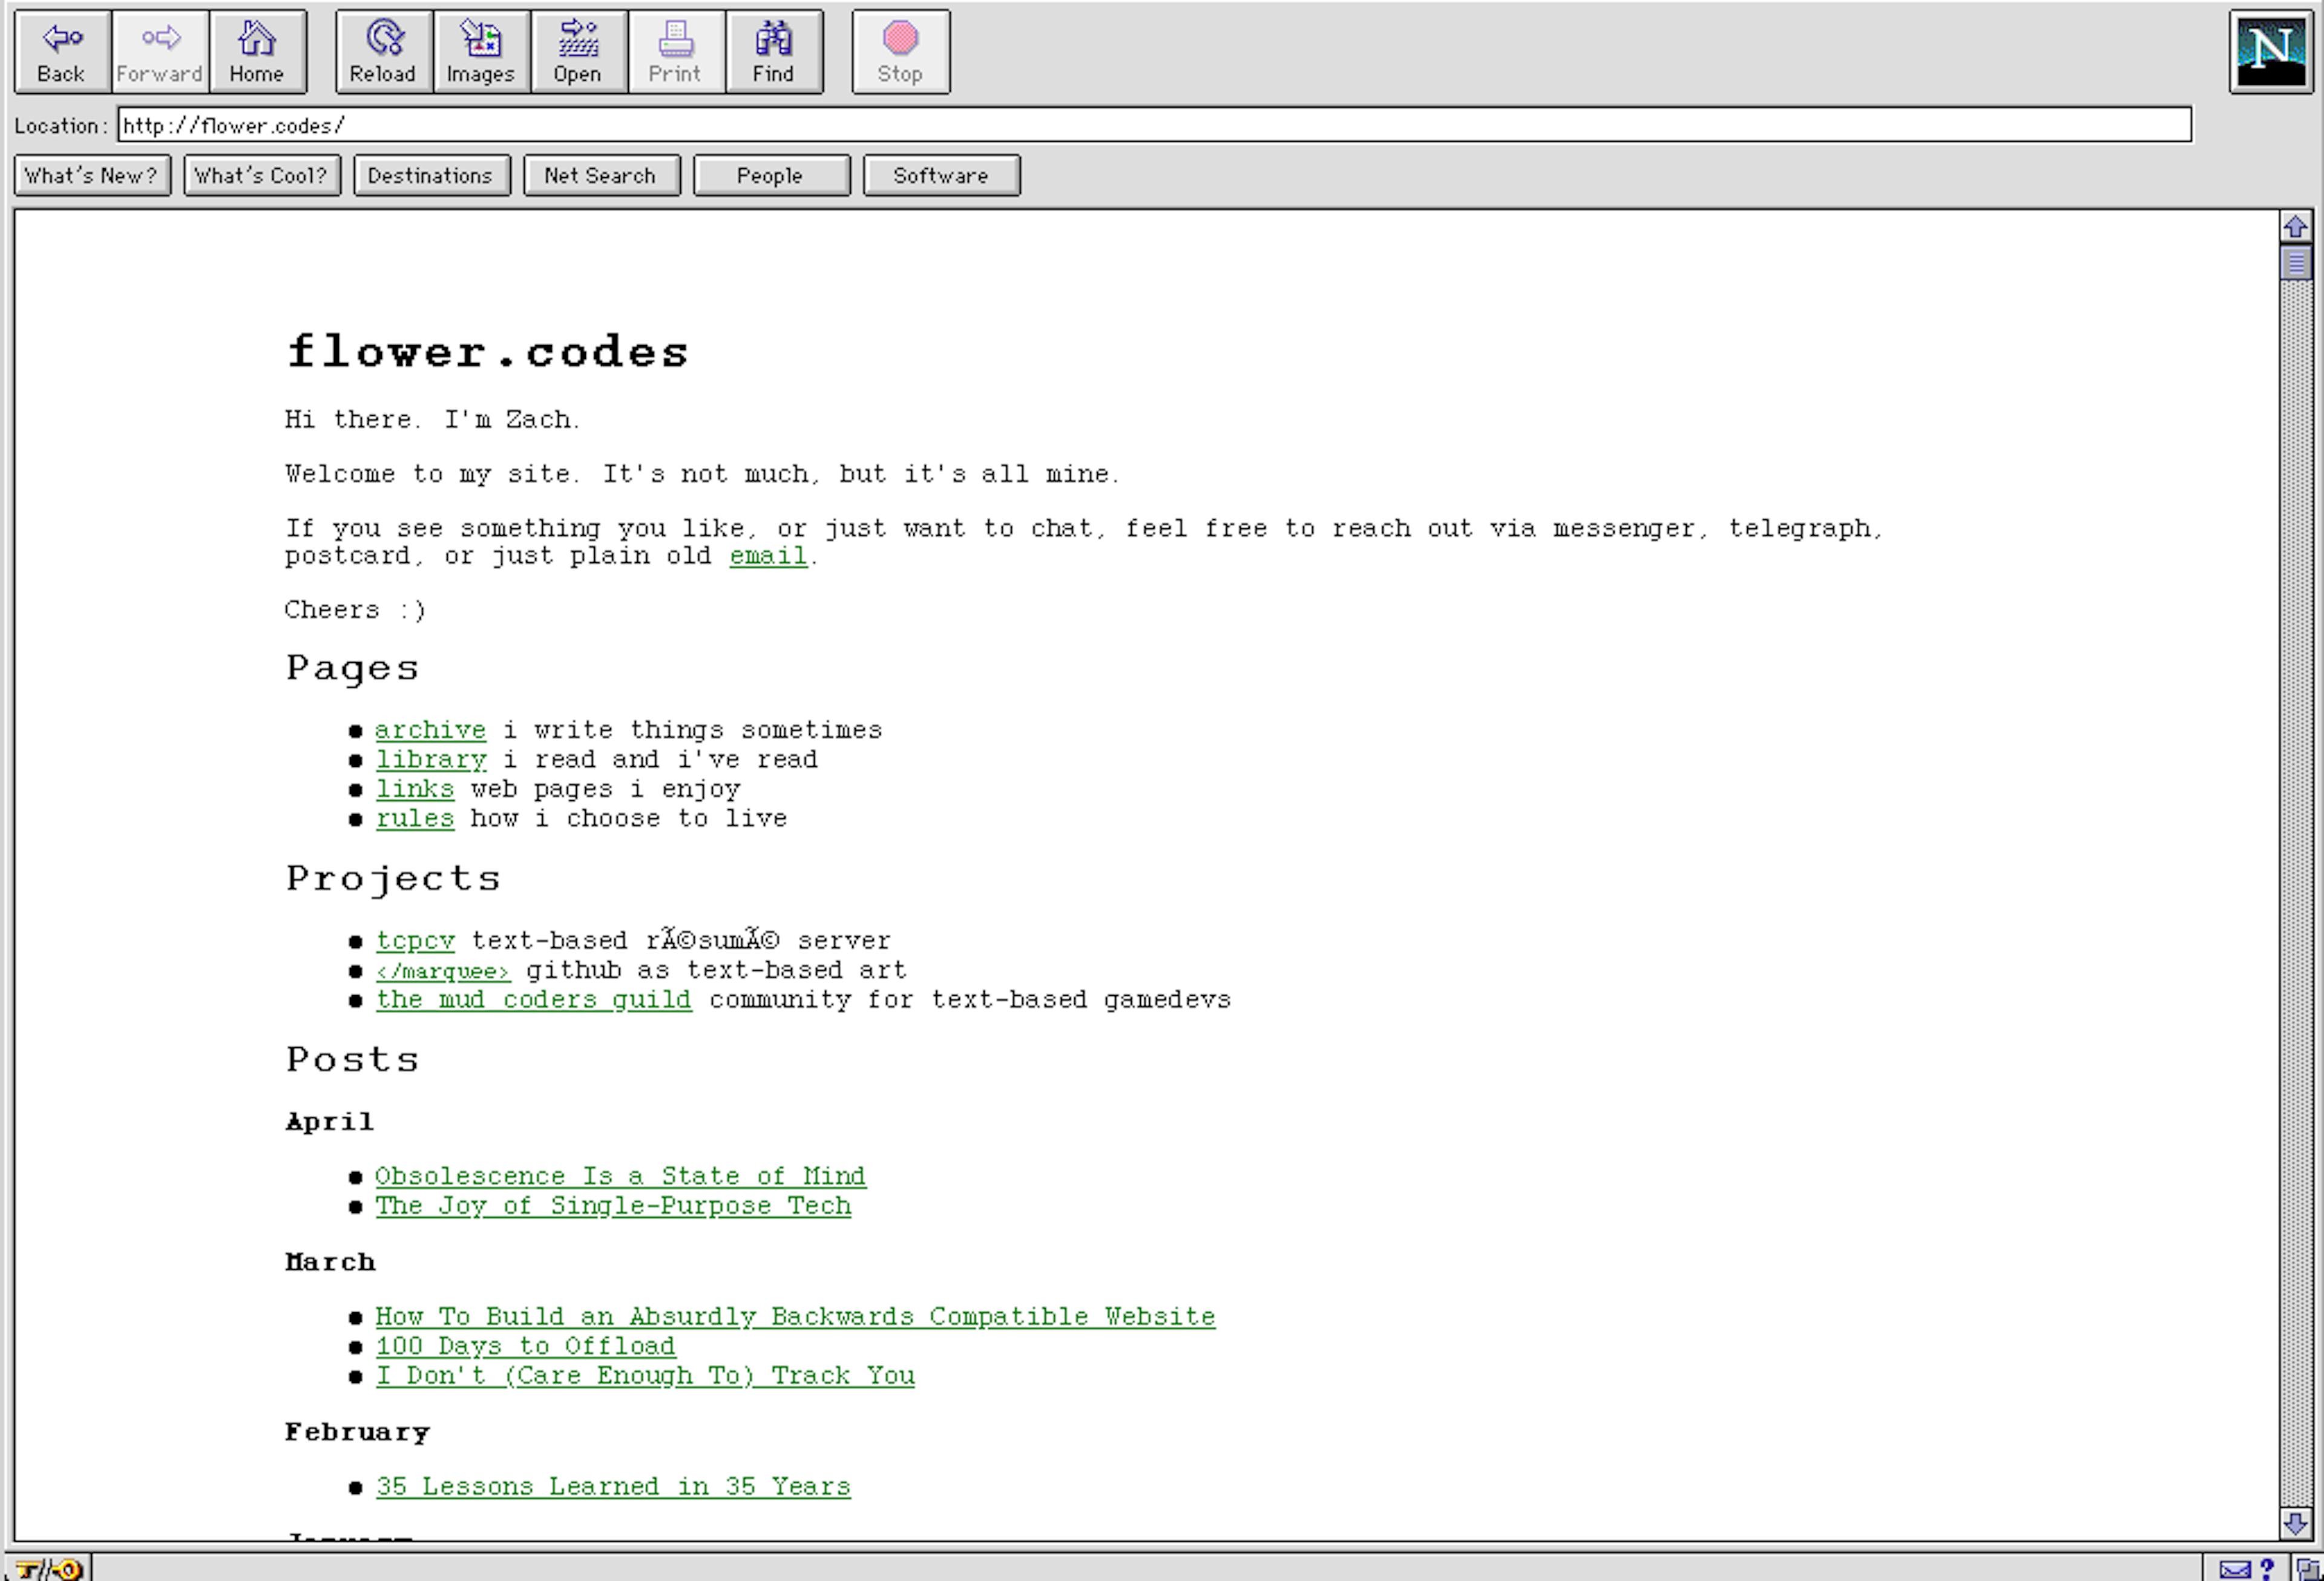 http://flower.codes on Netscape Navigator 3